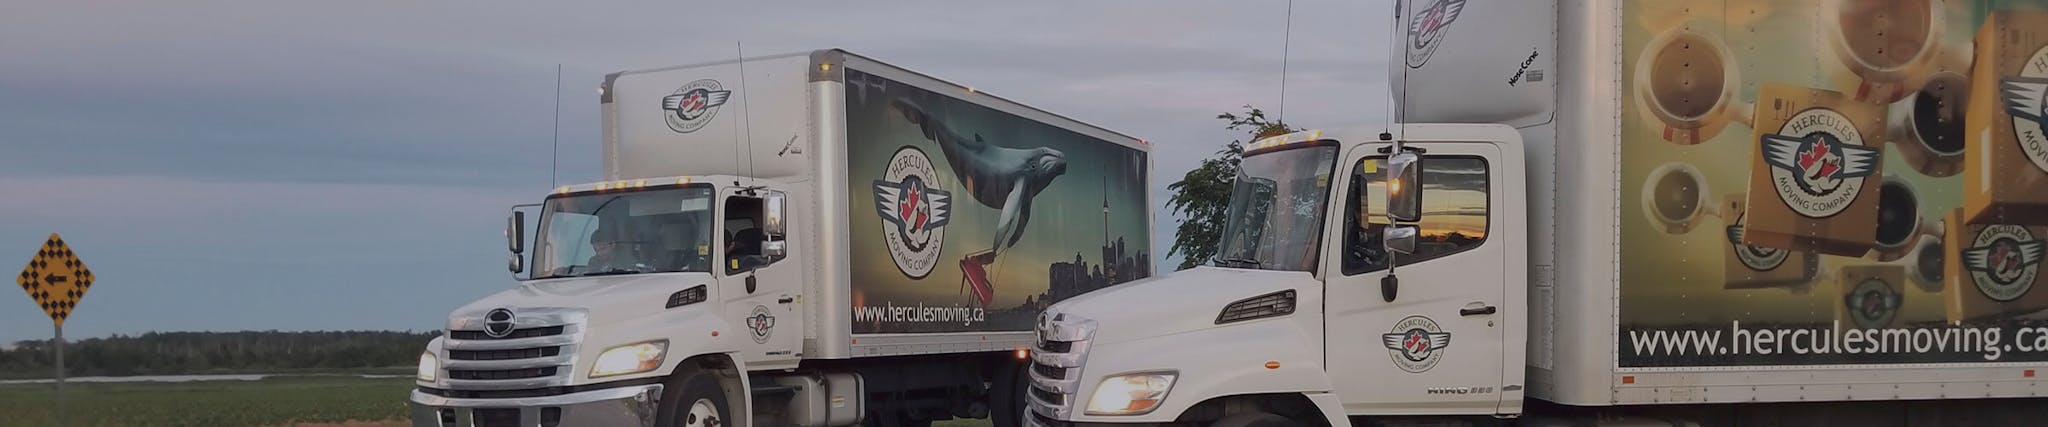 hercules moving company trucks